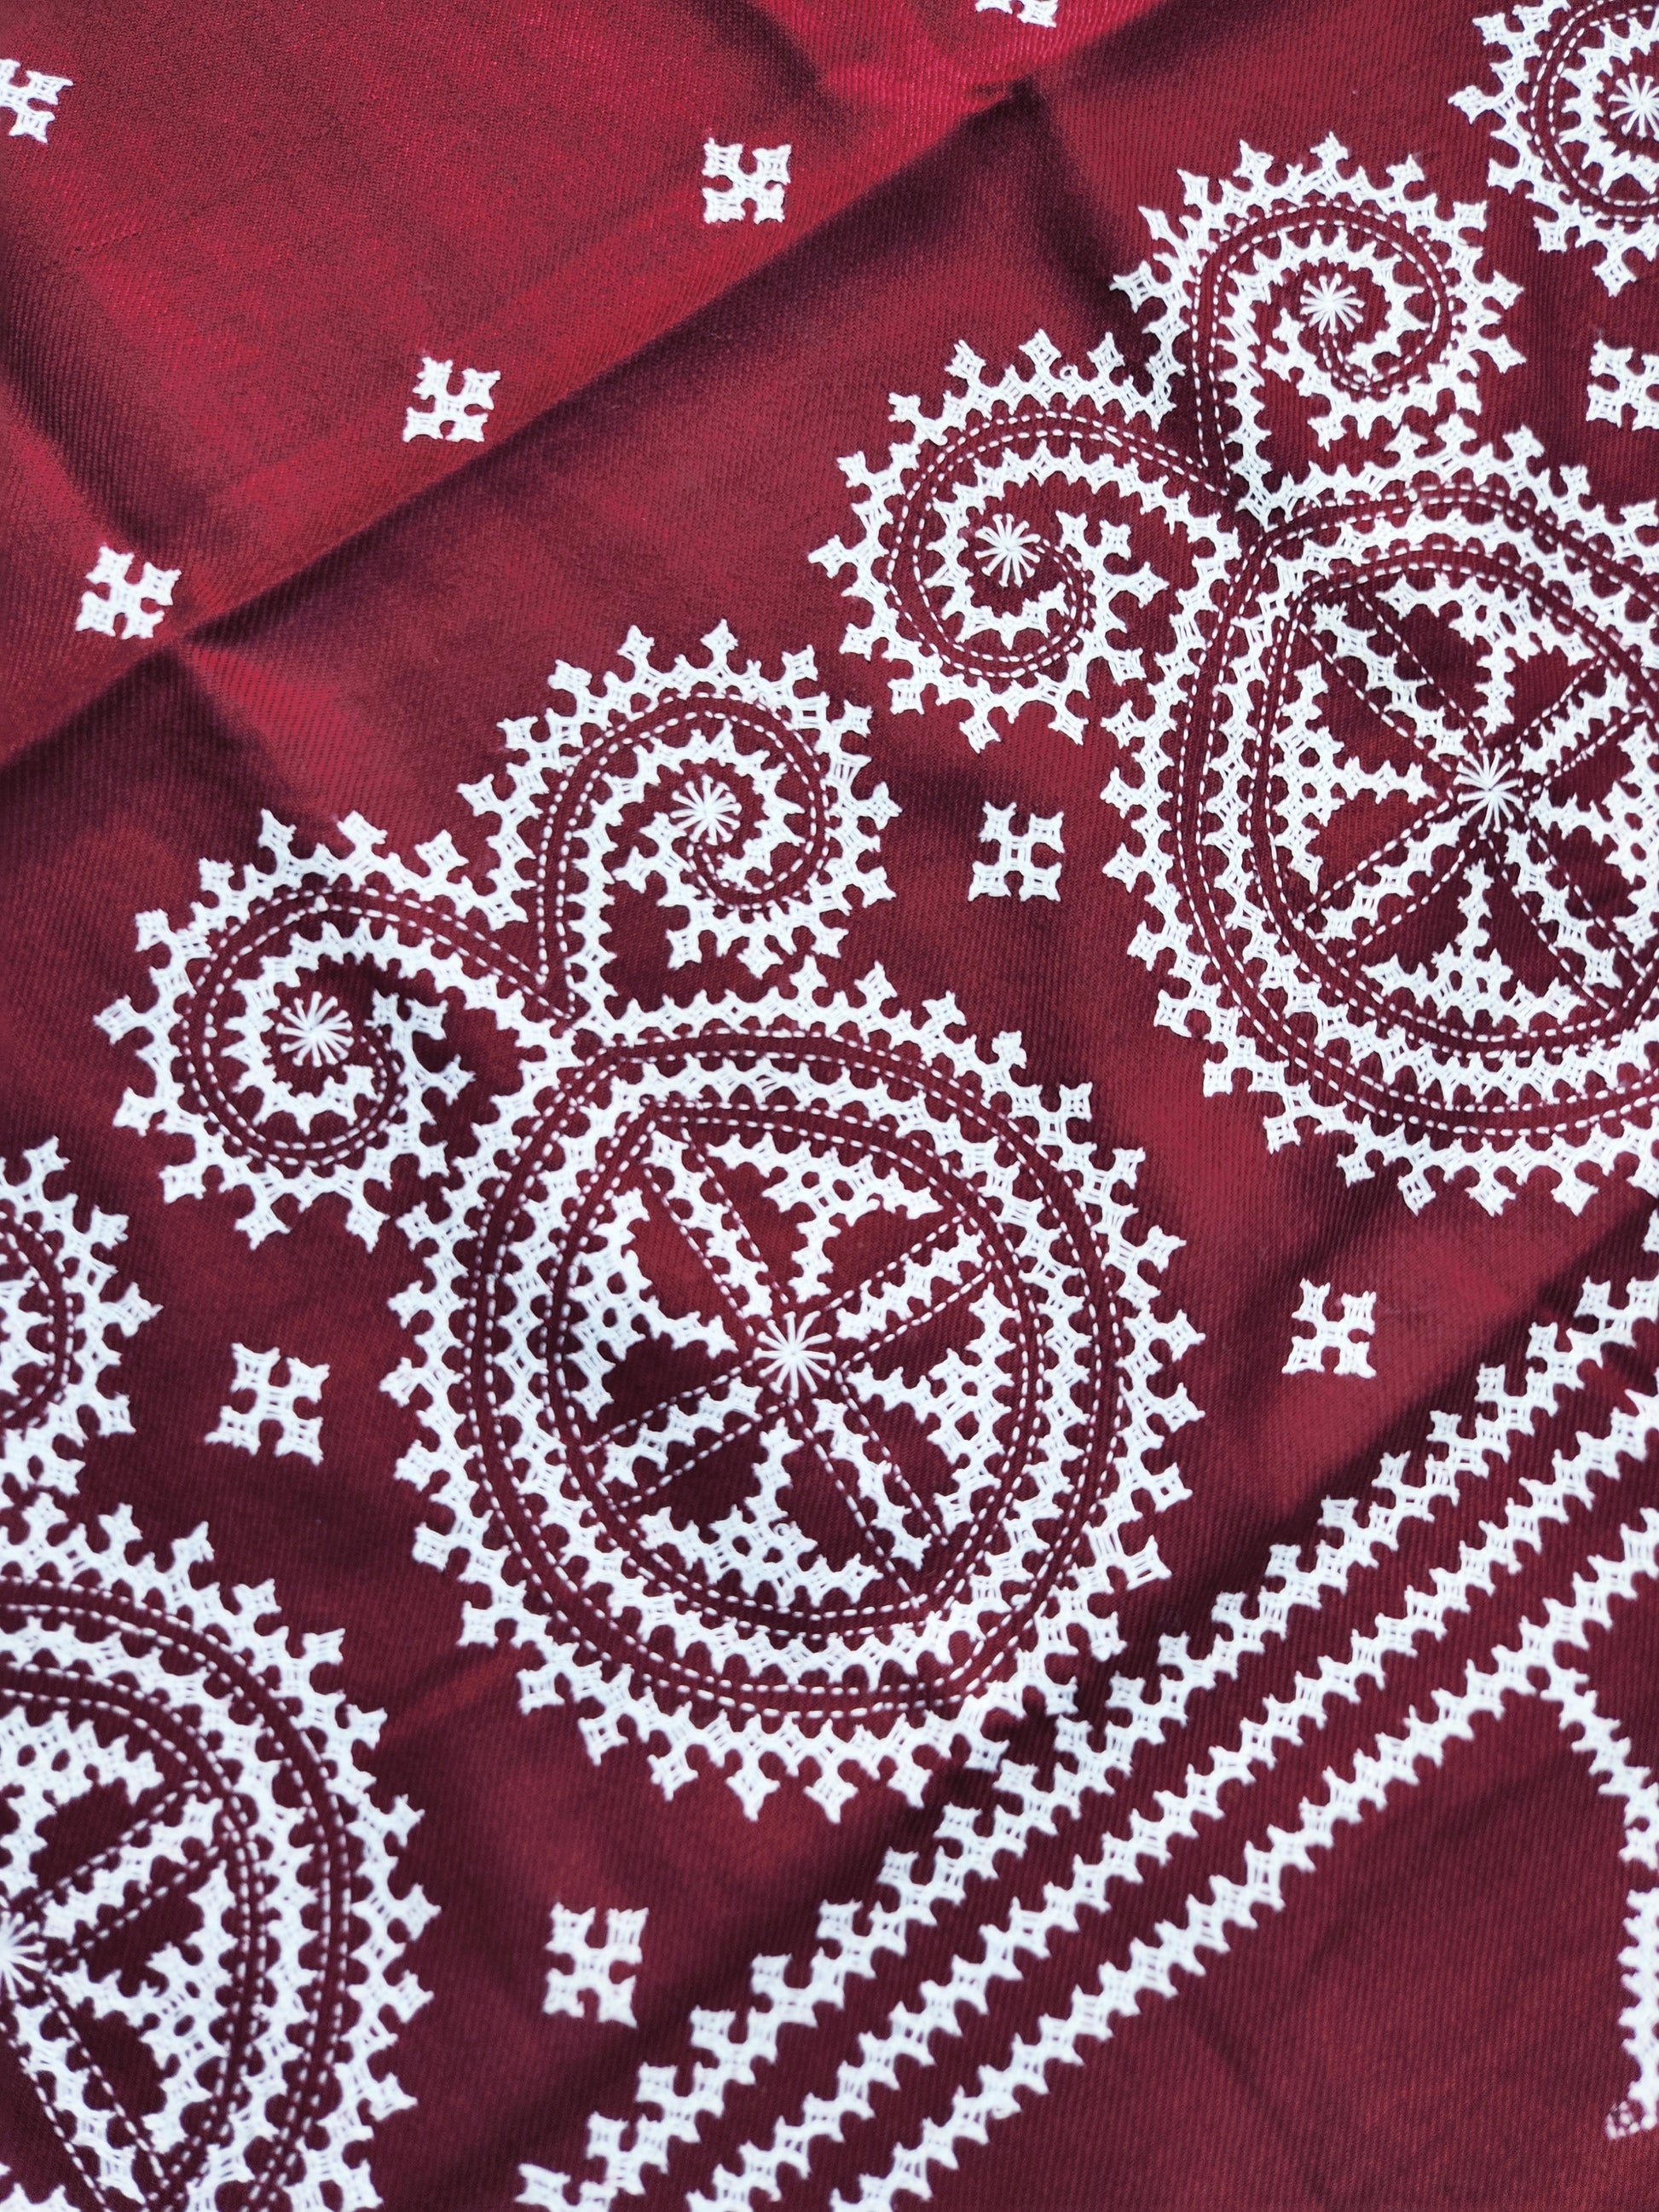 kutchwork woolen shawls handmade gifts Indian gifts handembroidery win…